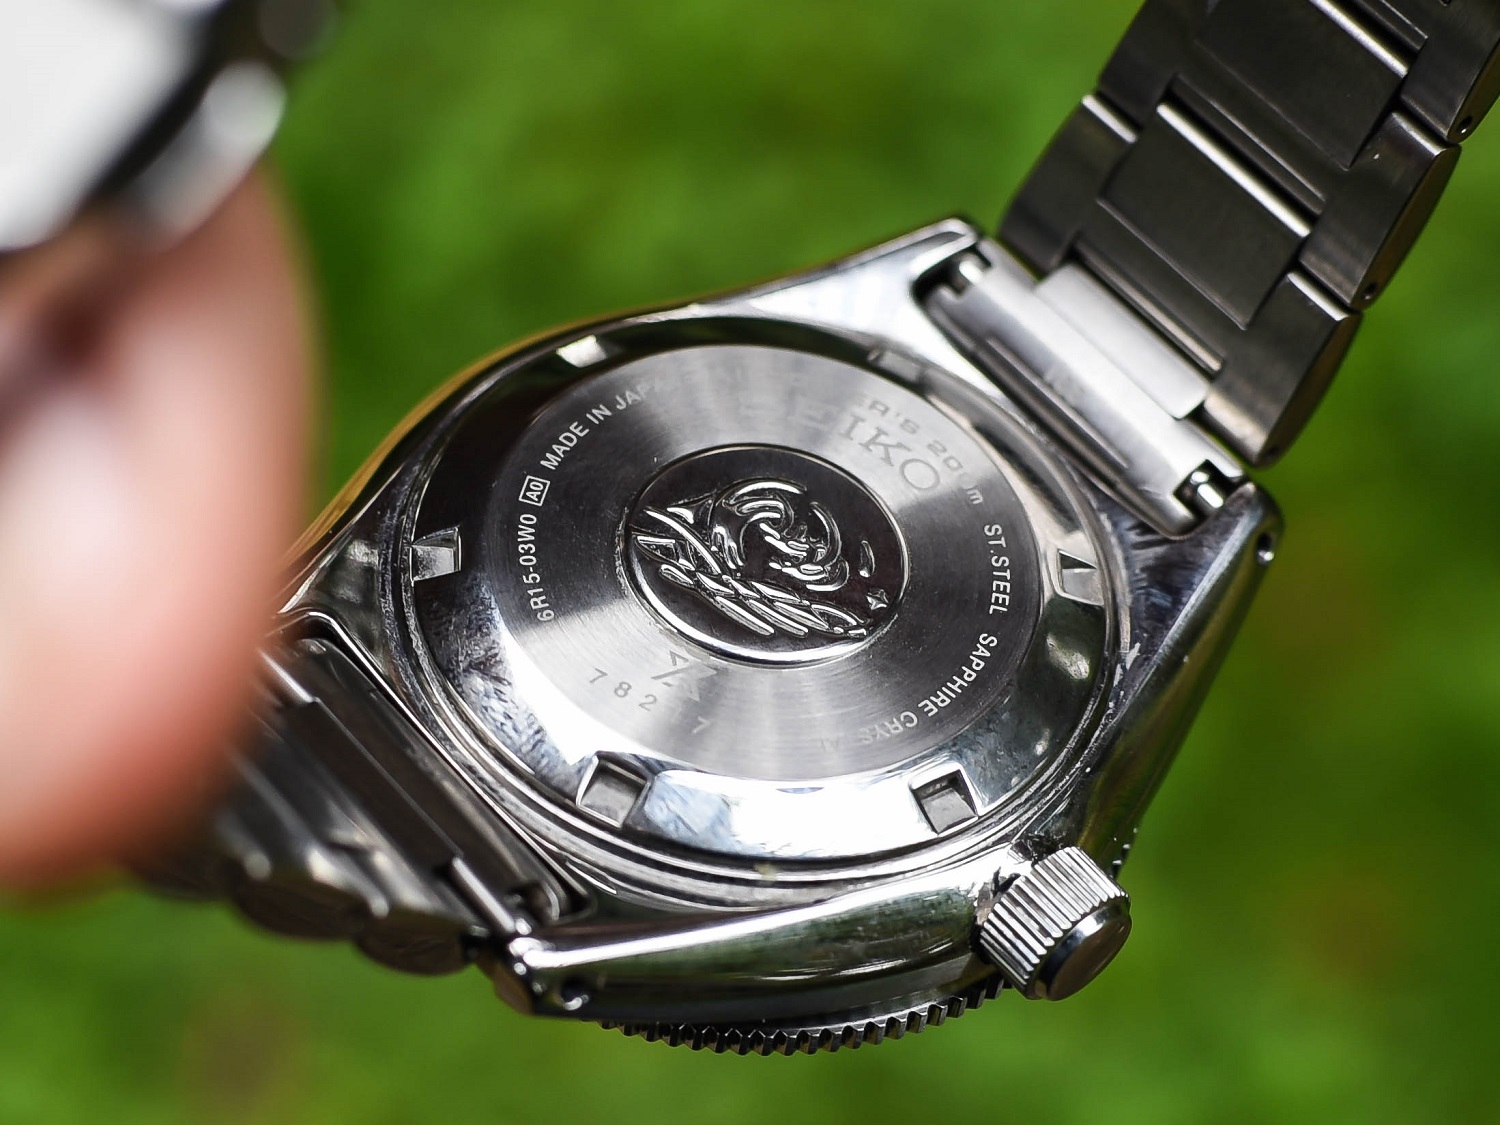 Seiko SBDC051 Watch Review | Two Broke Watch Snobs